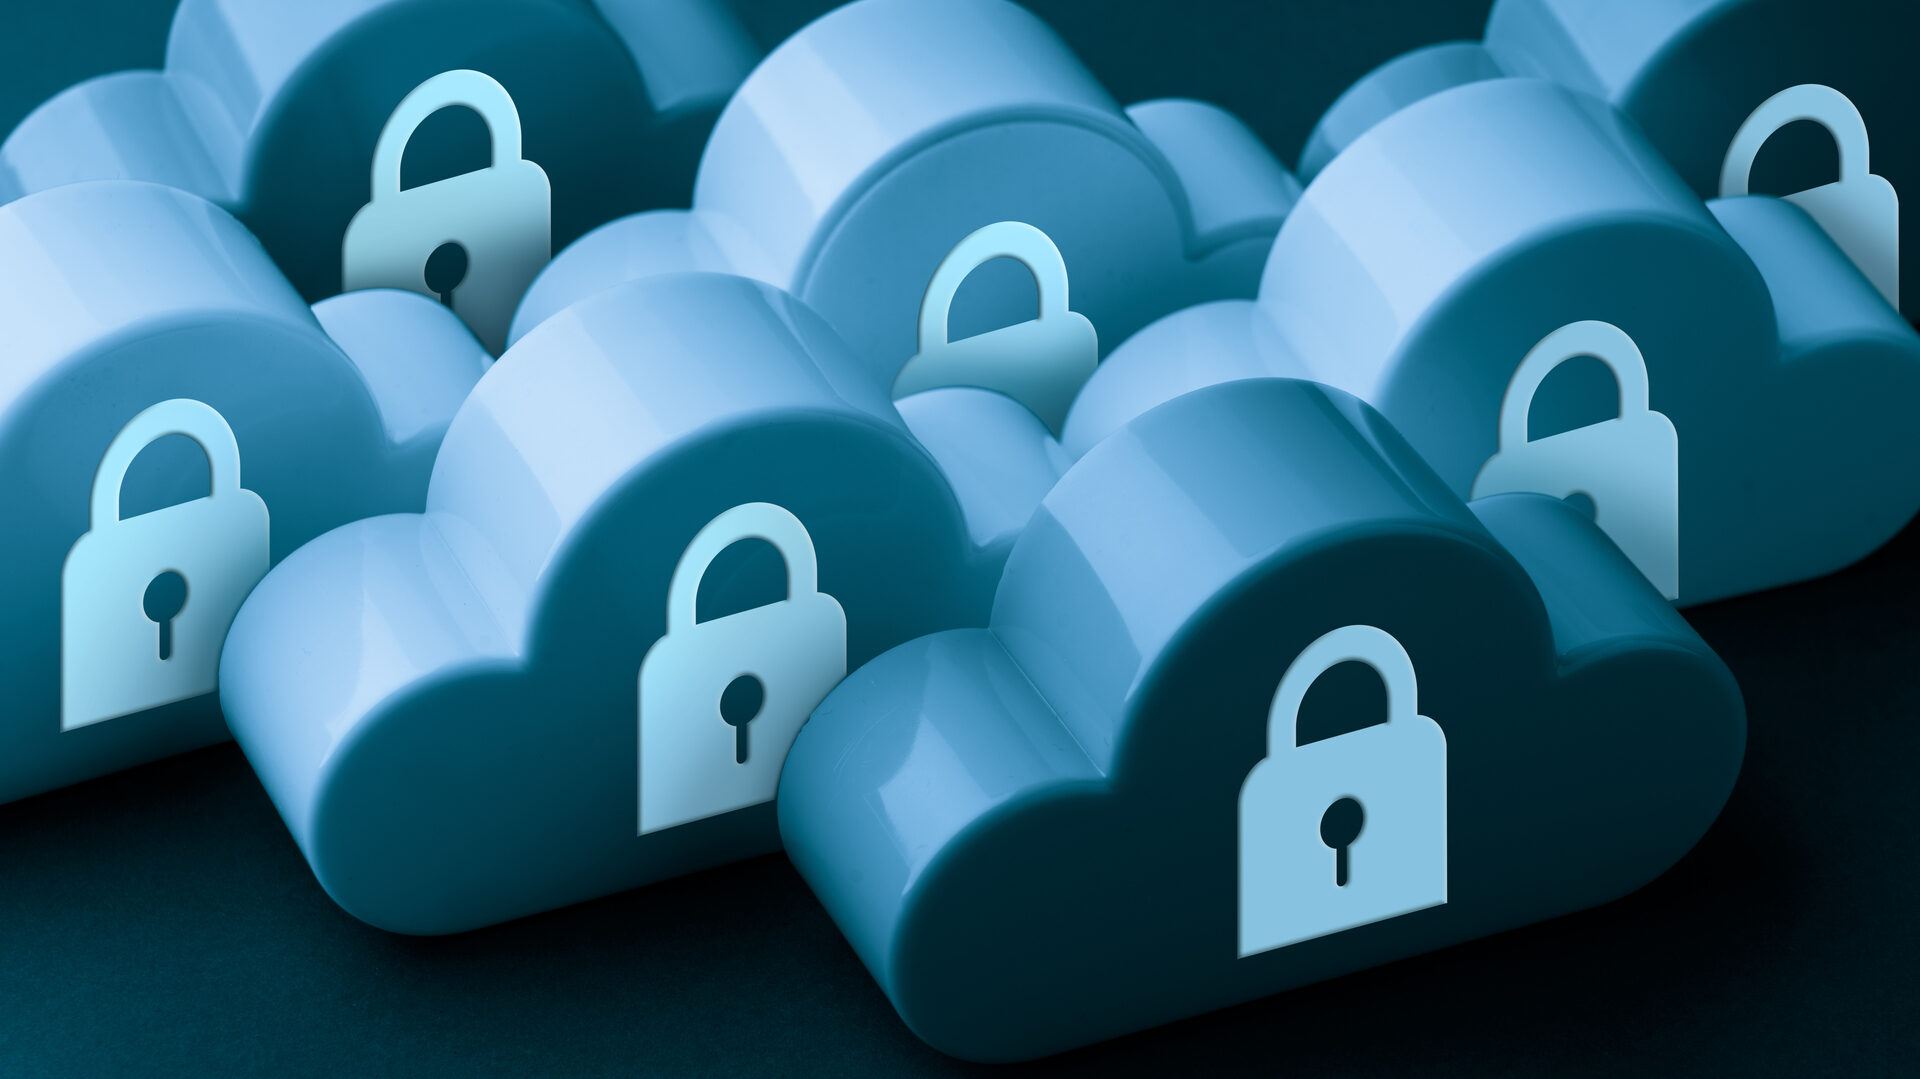 stockphotoscom-1275355 Data Security Cyber Security Cloud Security